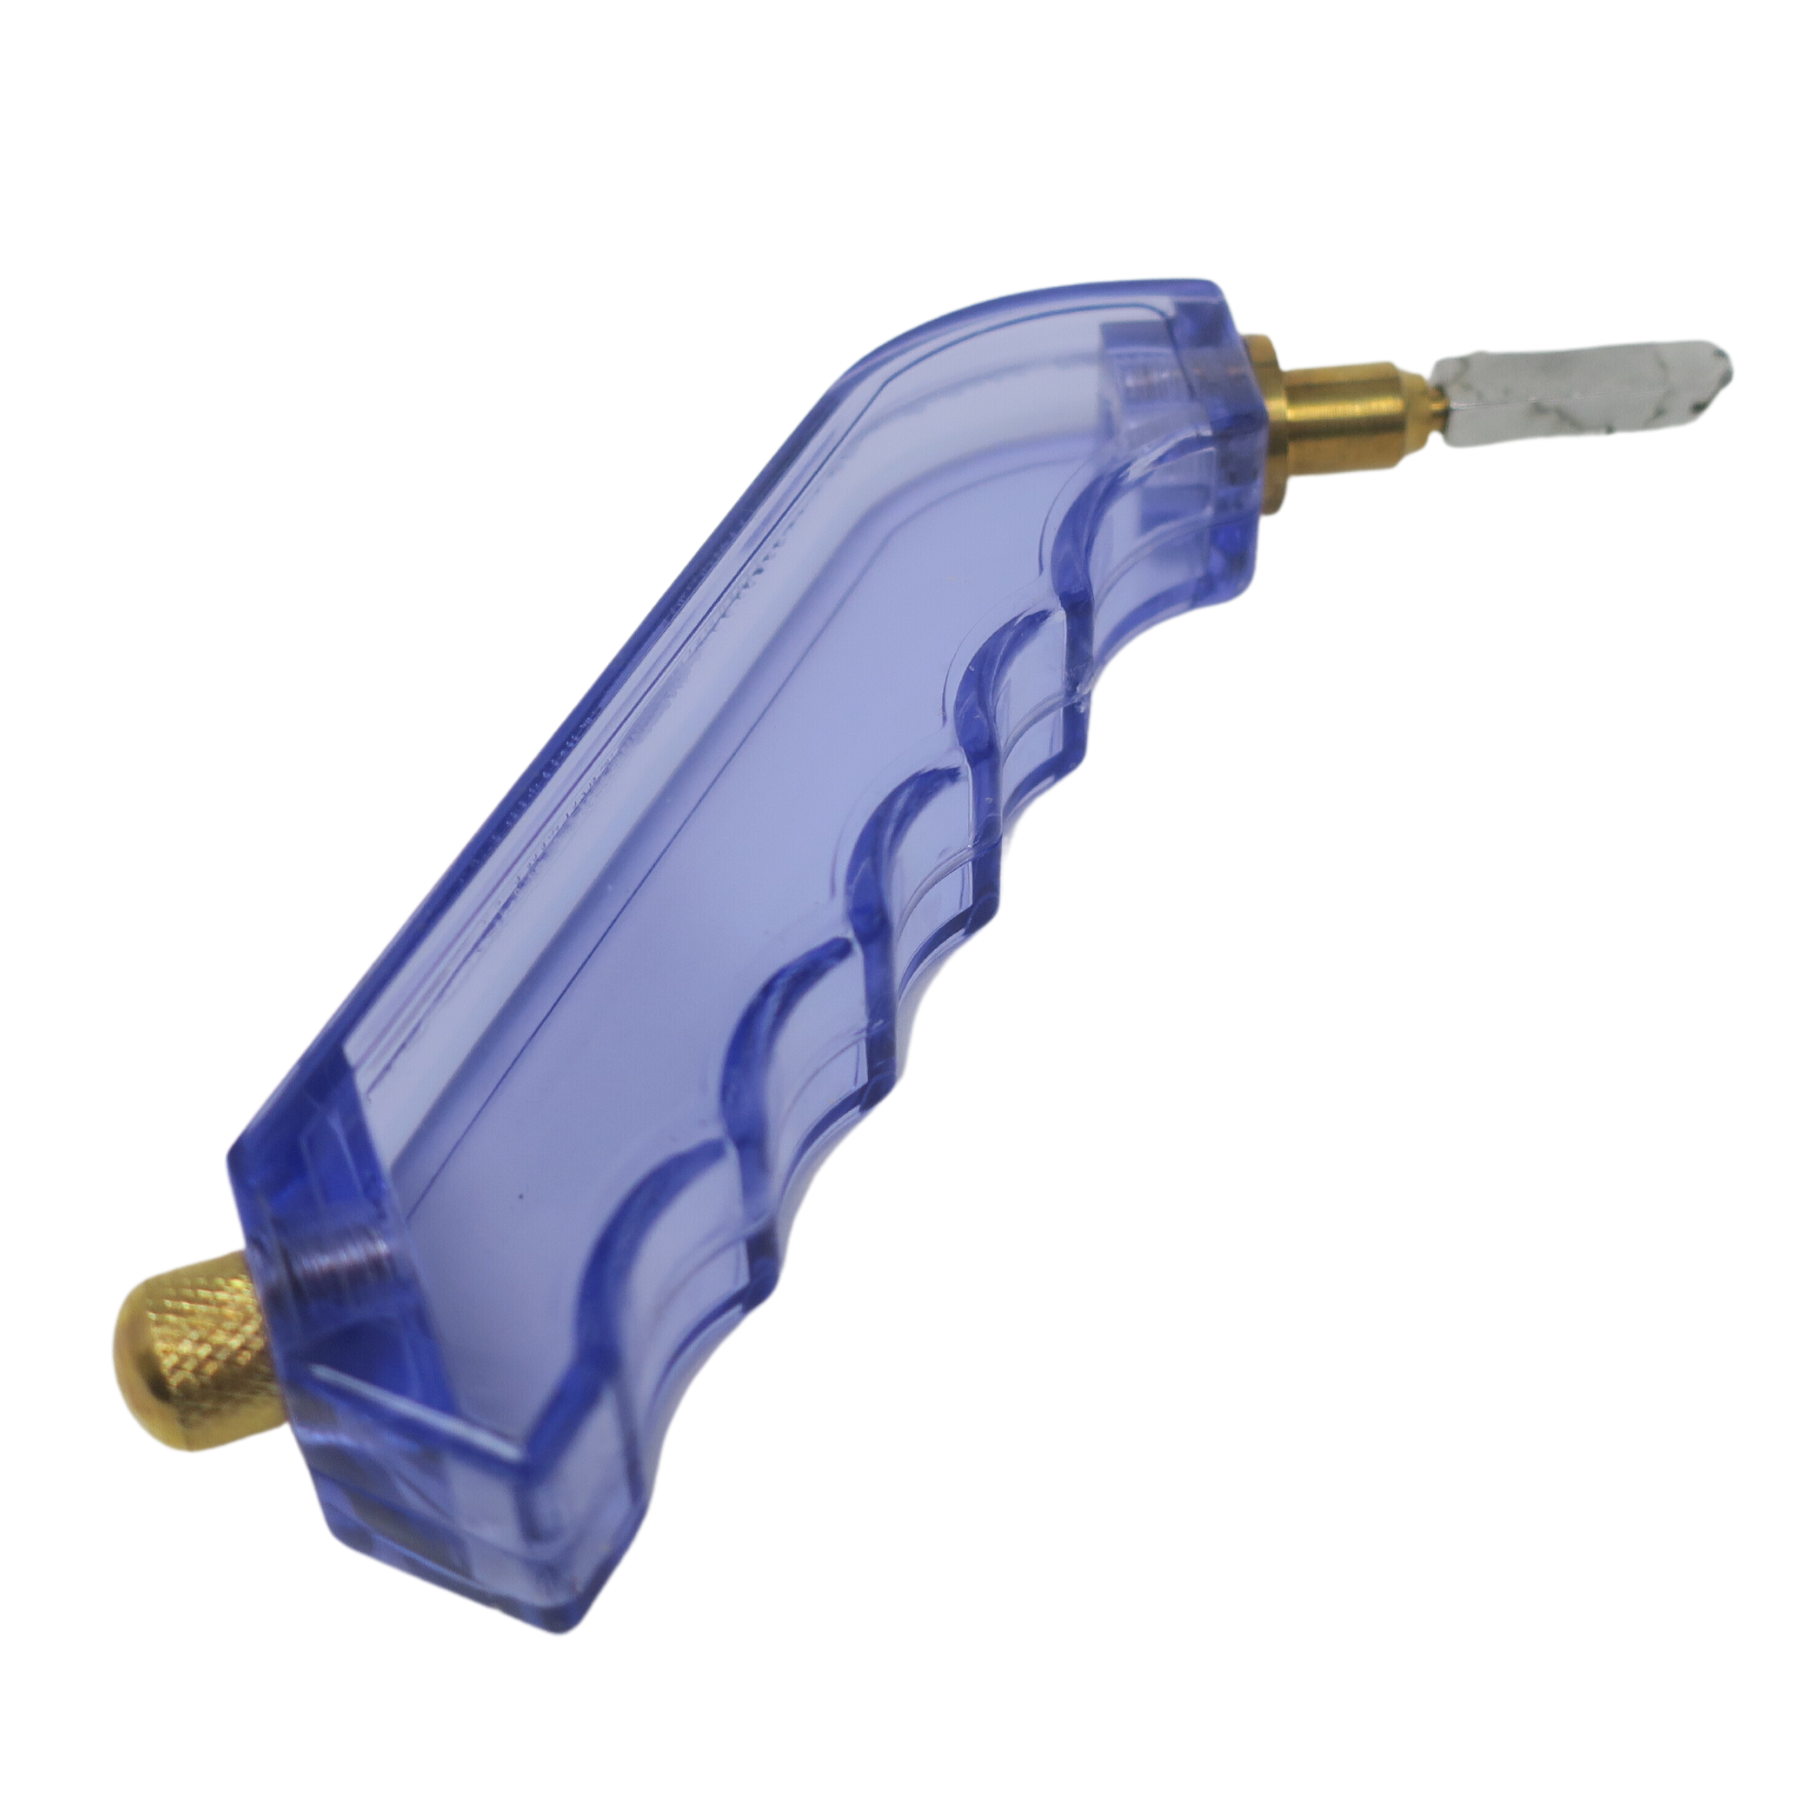 Tools - Pistol Grip: Oil Filled Glass Cutter